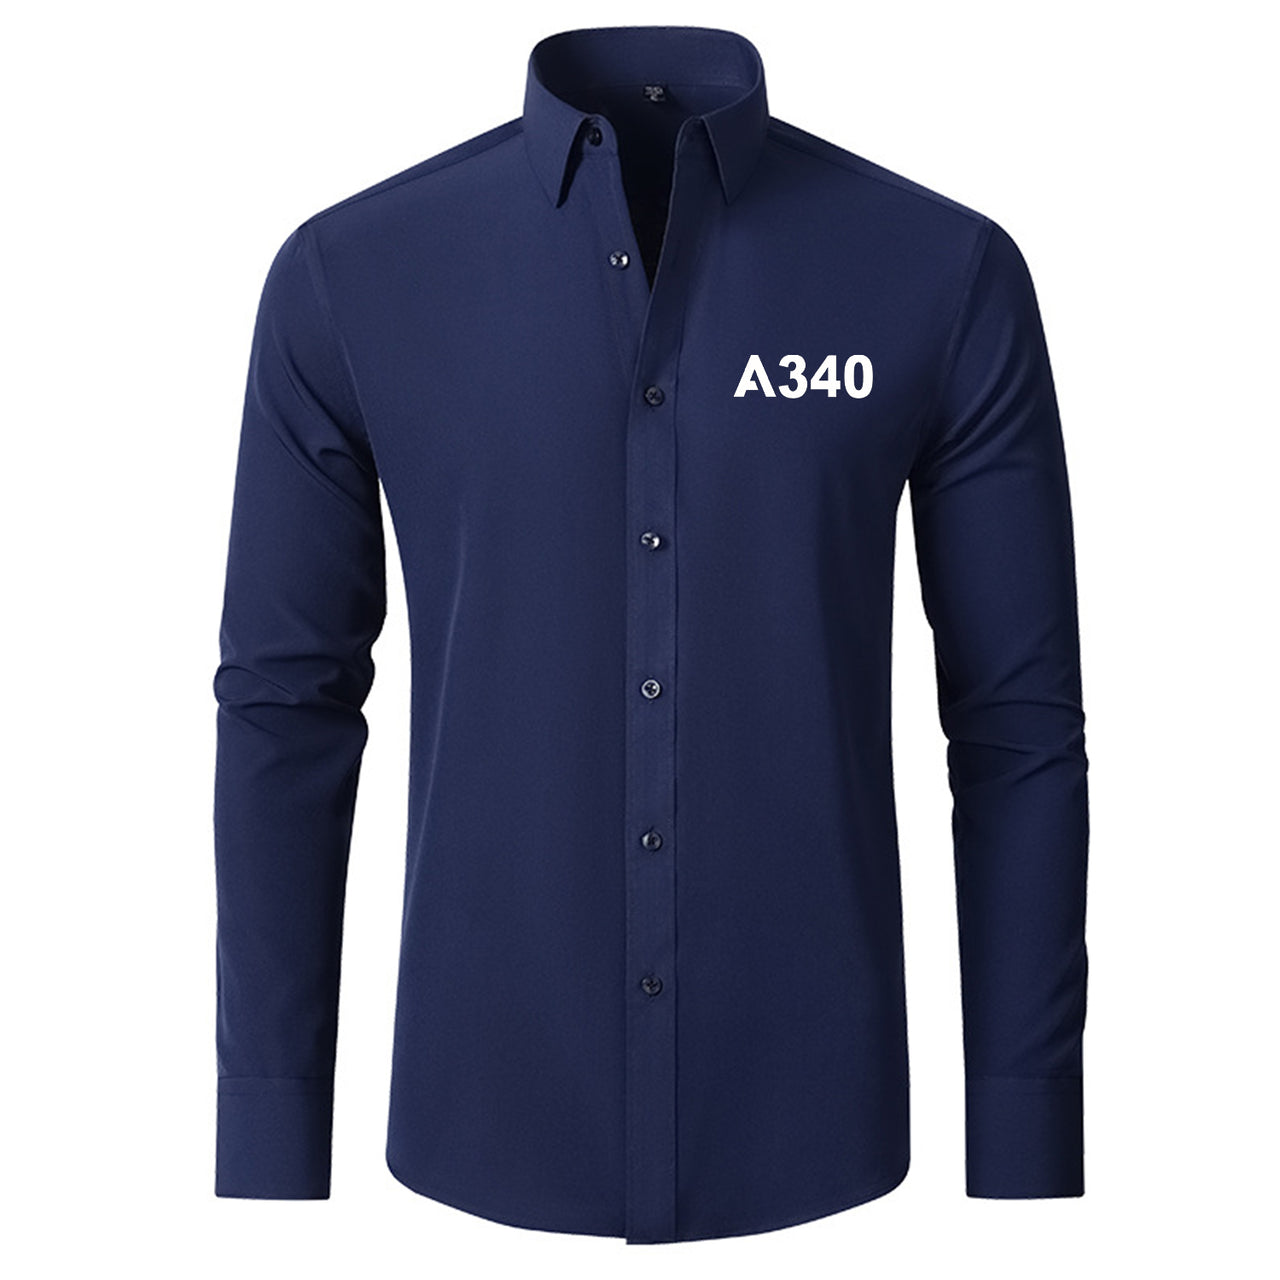 A340 Flat Text Designed Long Sleeve Shirts